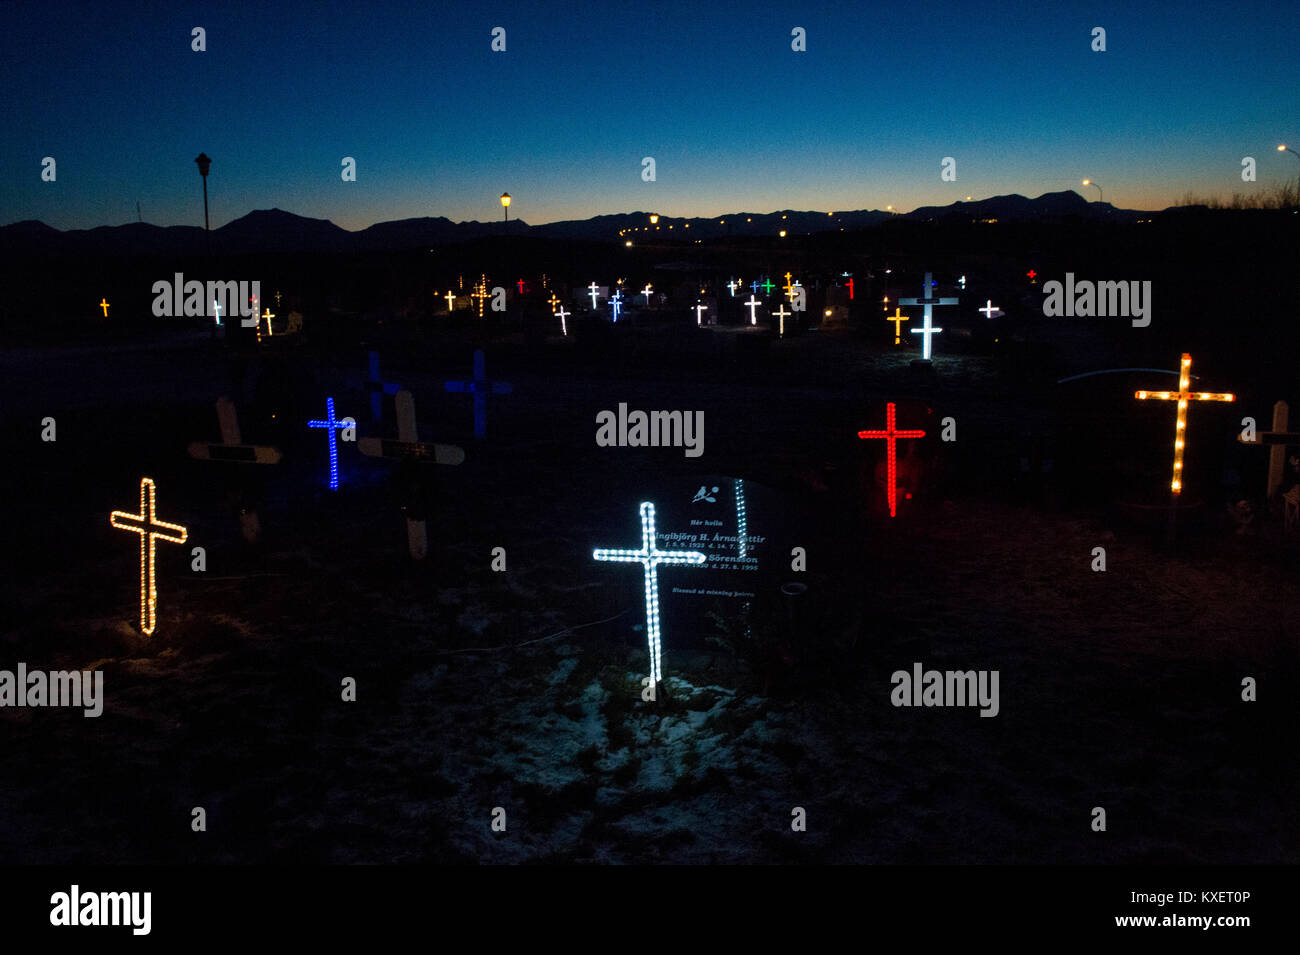 Illuminated cemetery in Iceland. Stock Photo